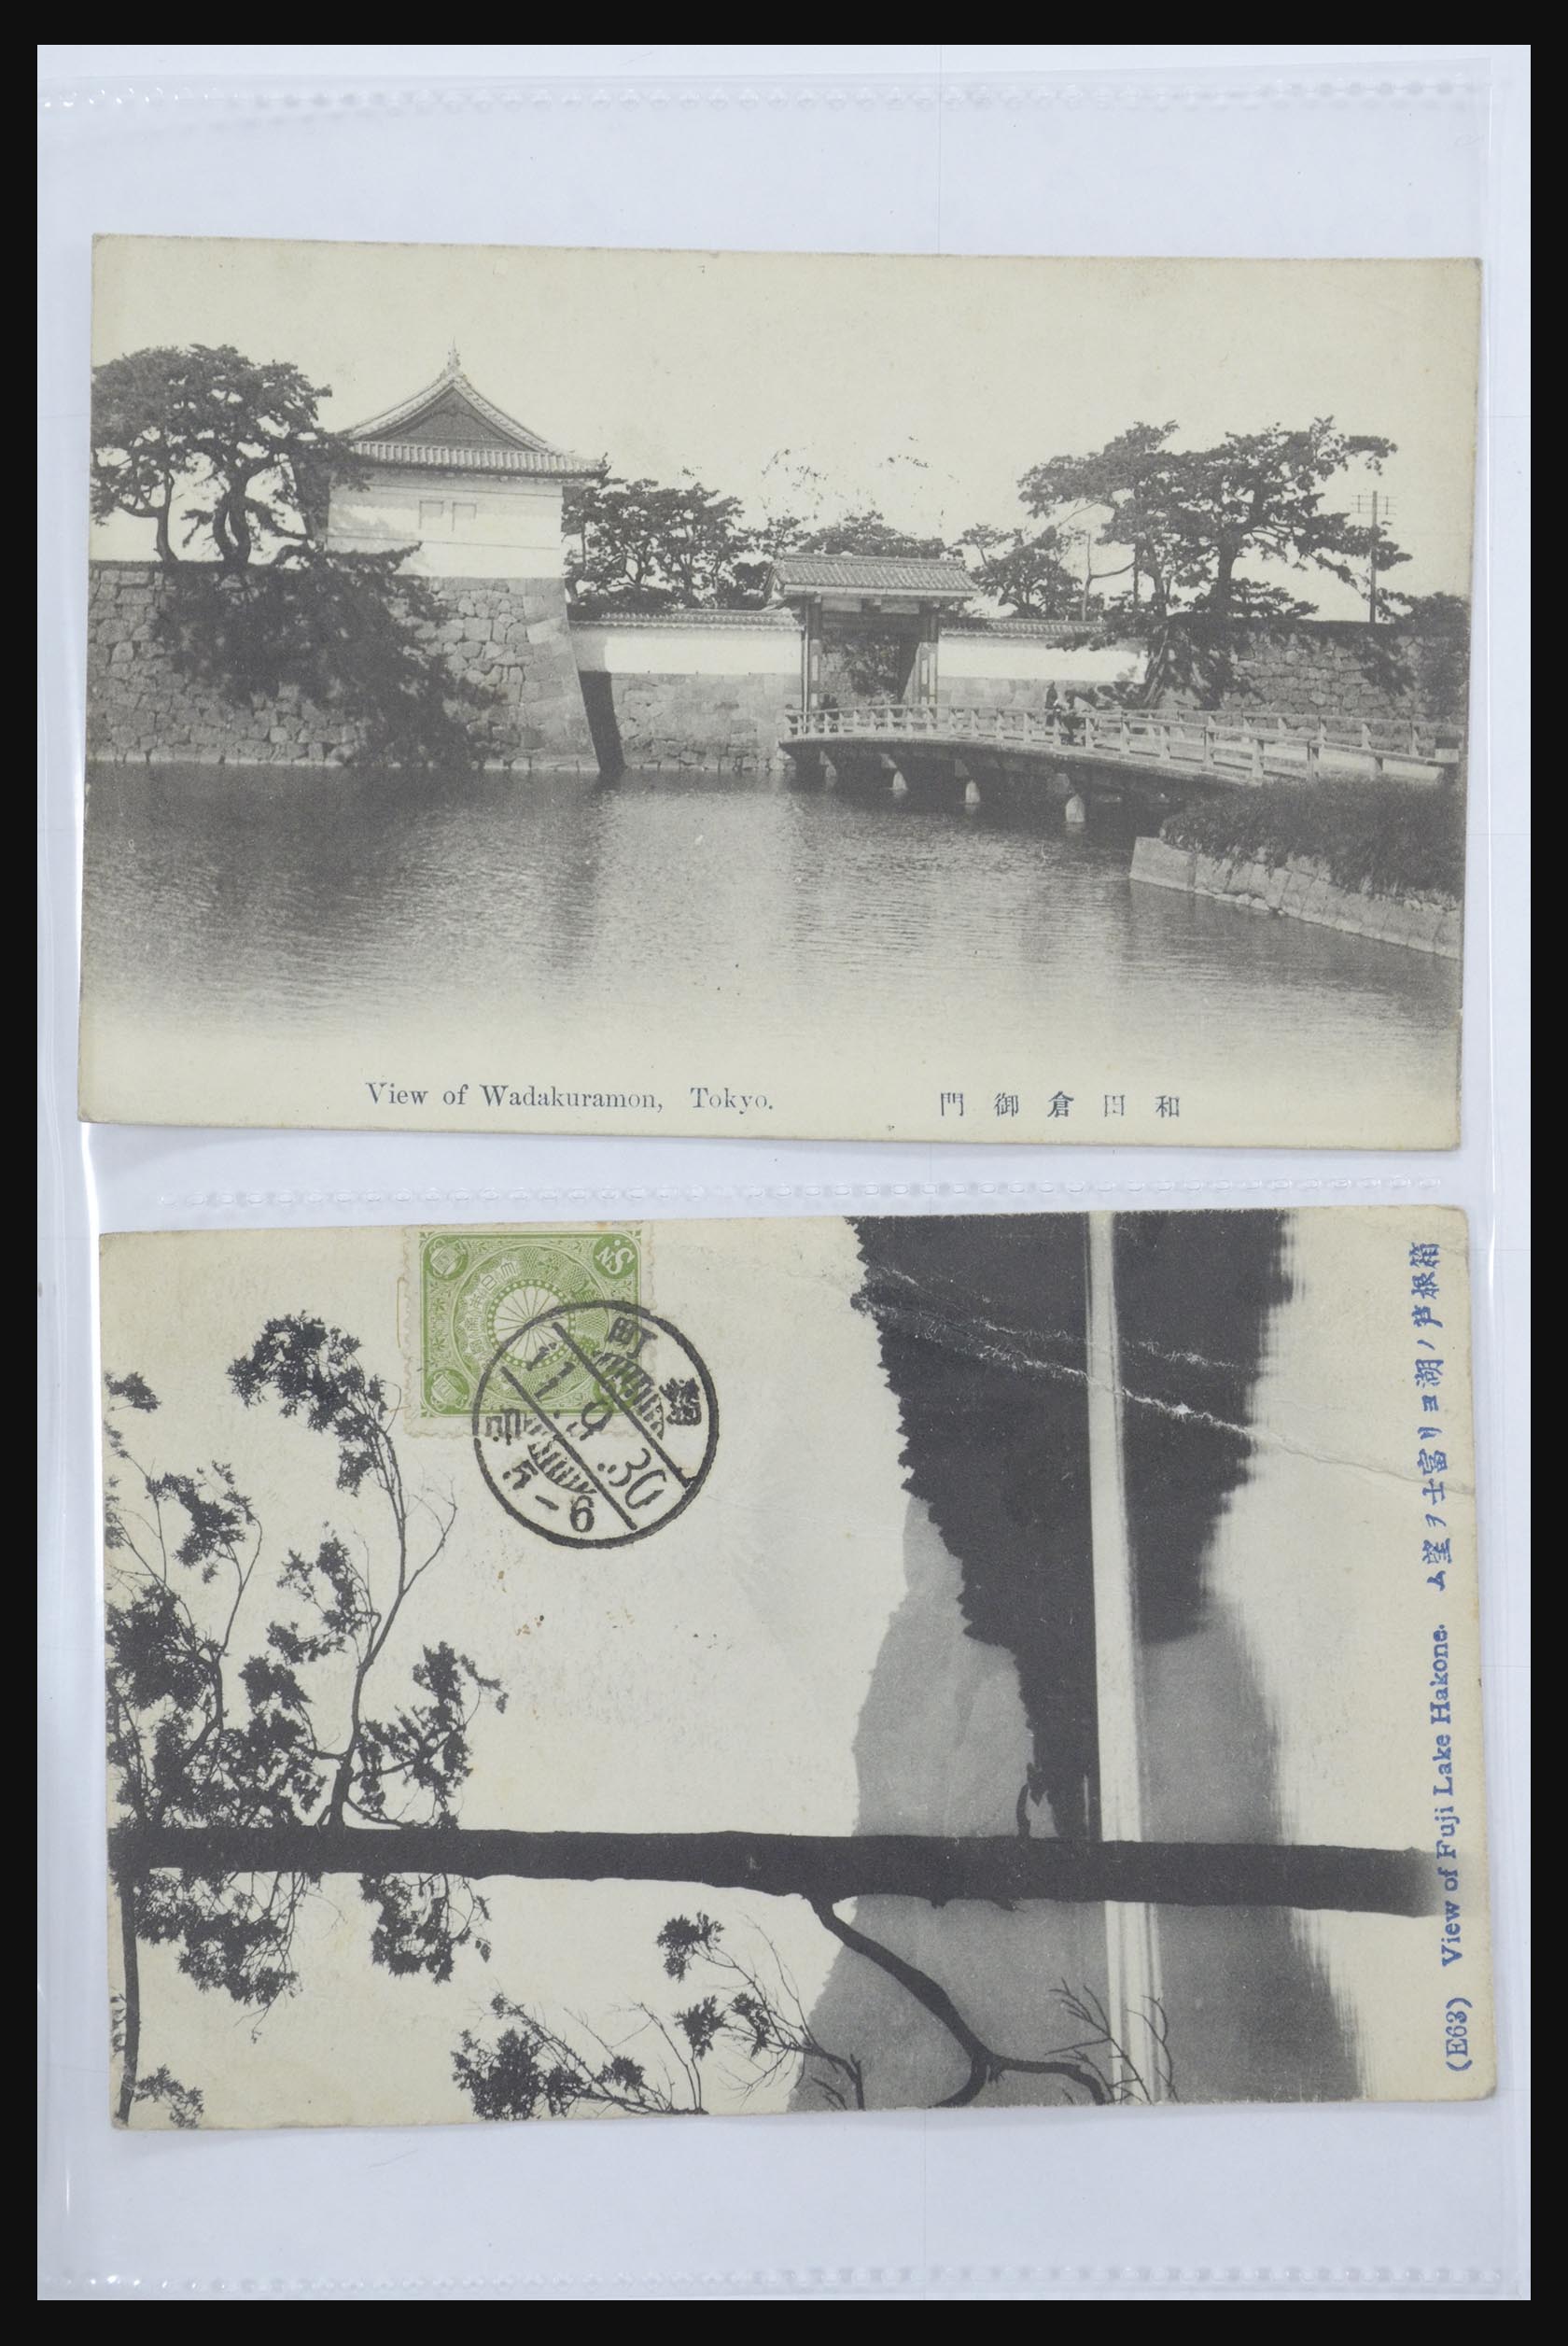 31667 035 - 31667 Japan picture postcards 1900-1920.